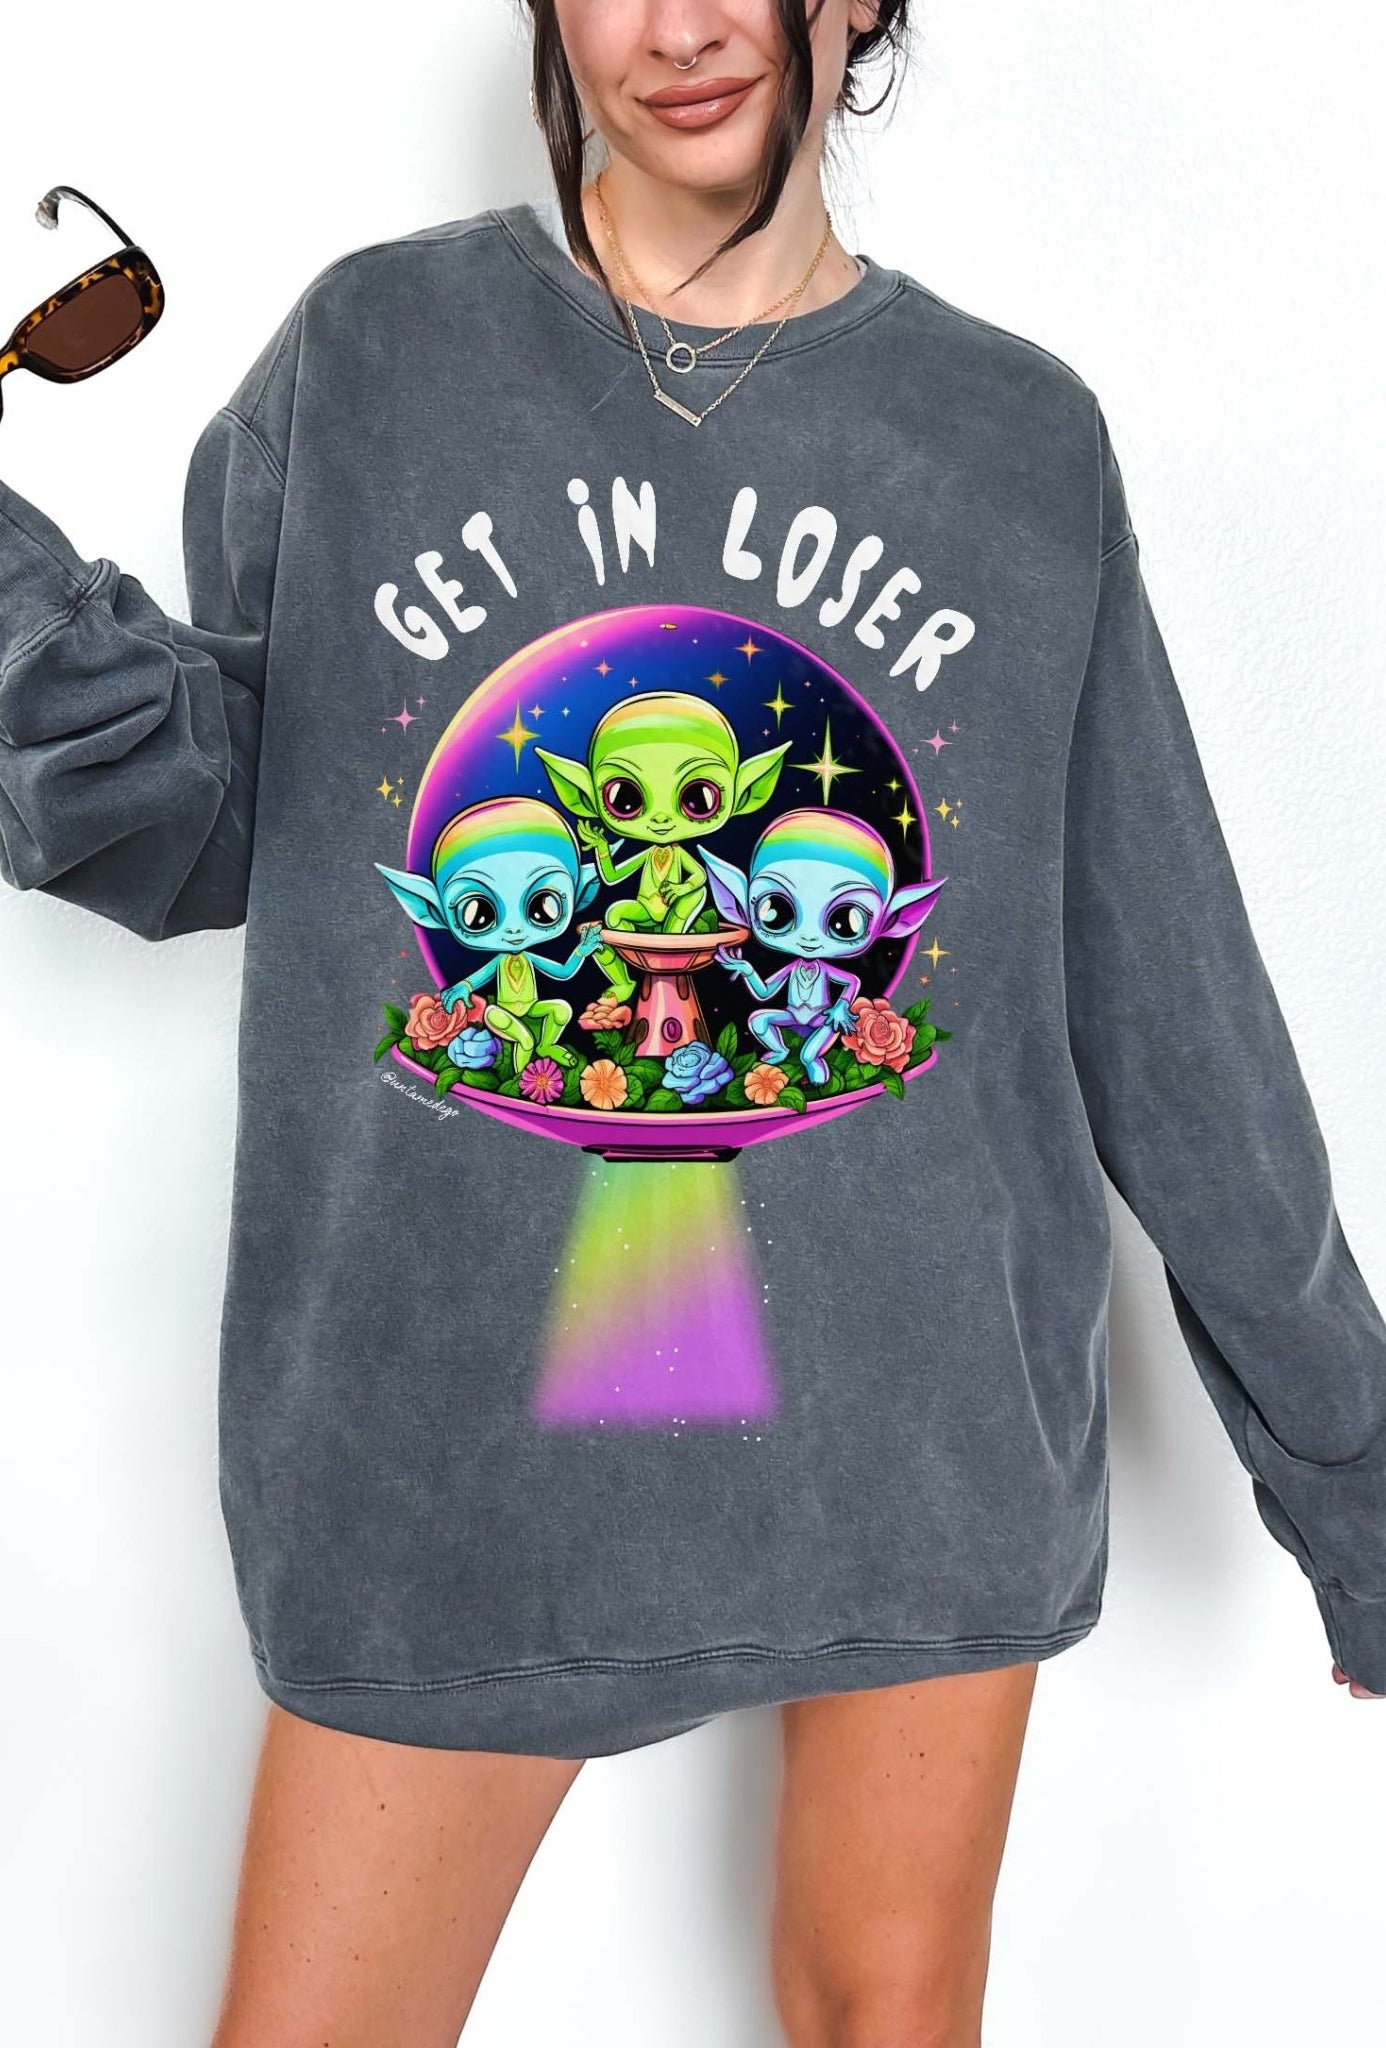 Get In Loser Aliens Crew Sweatshirt - UntamedEgo LLC.